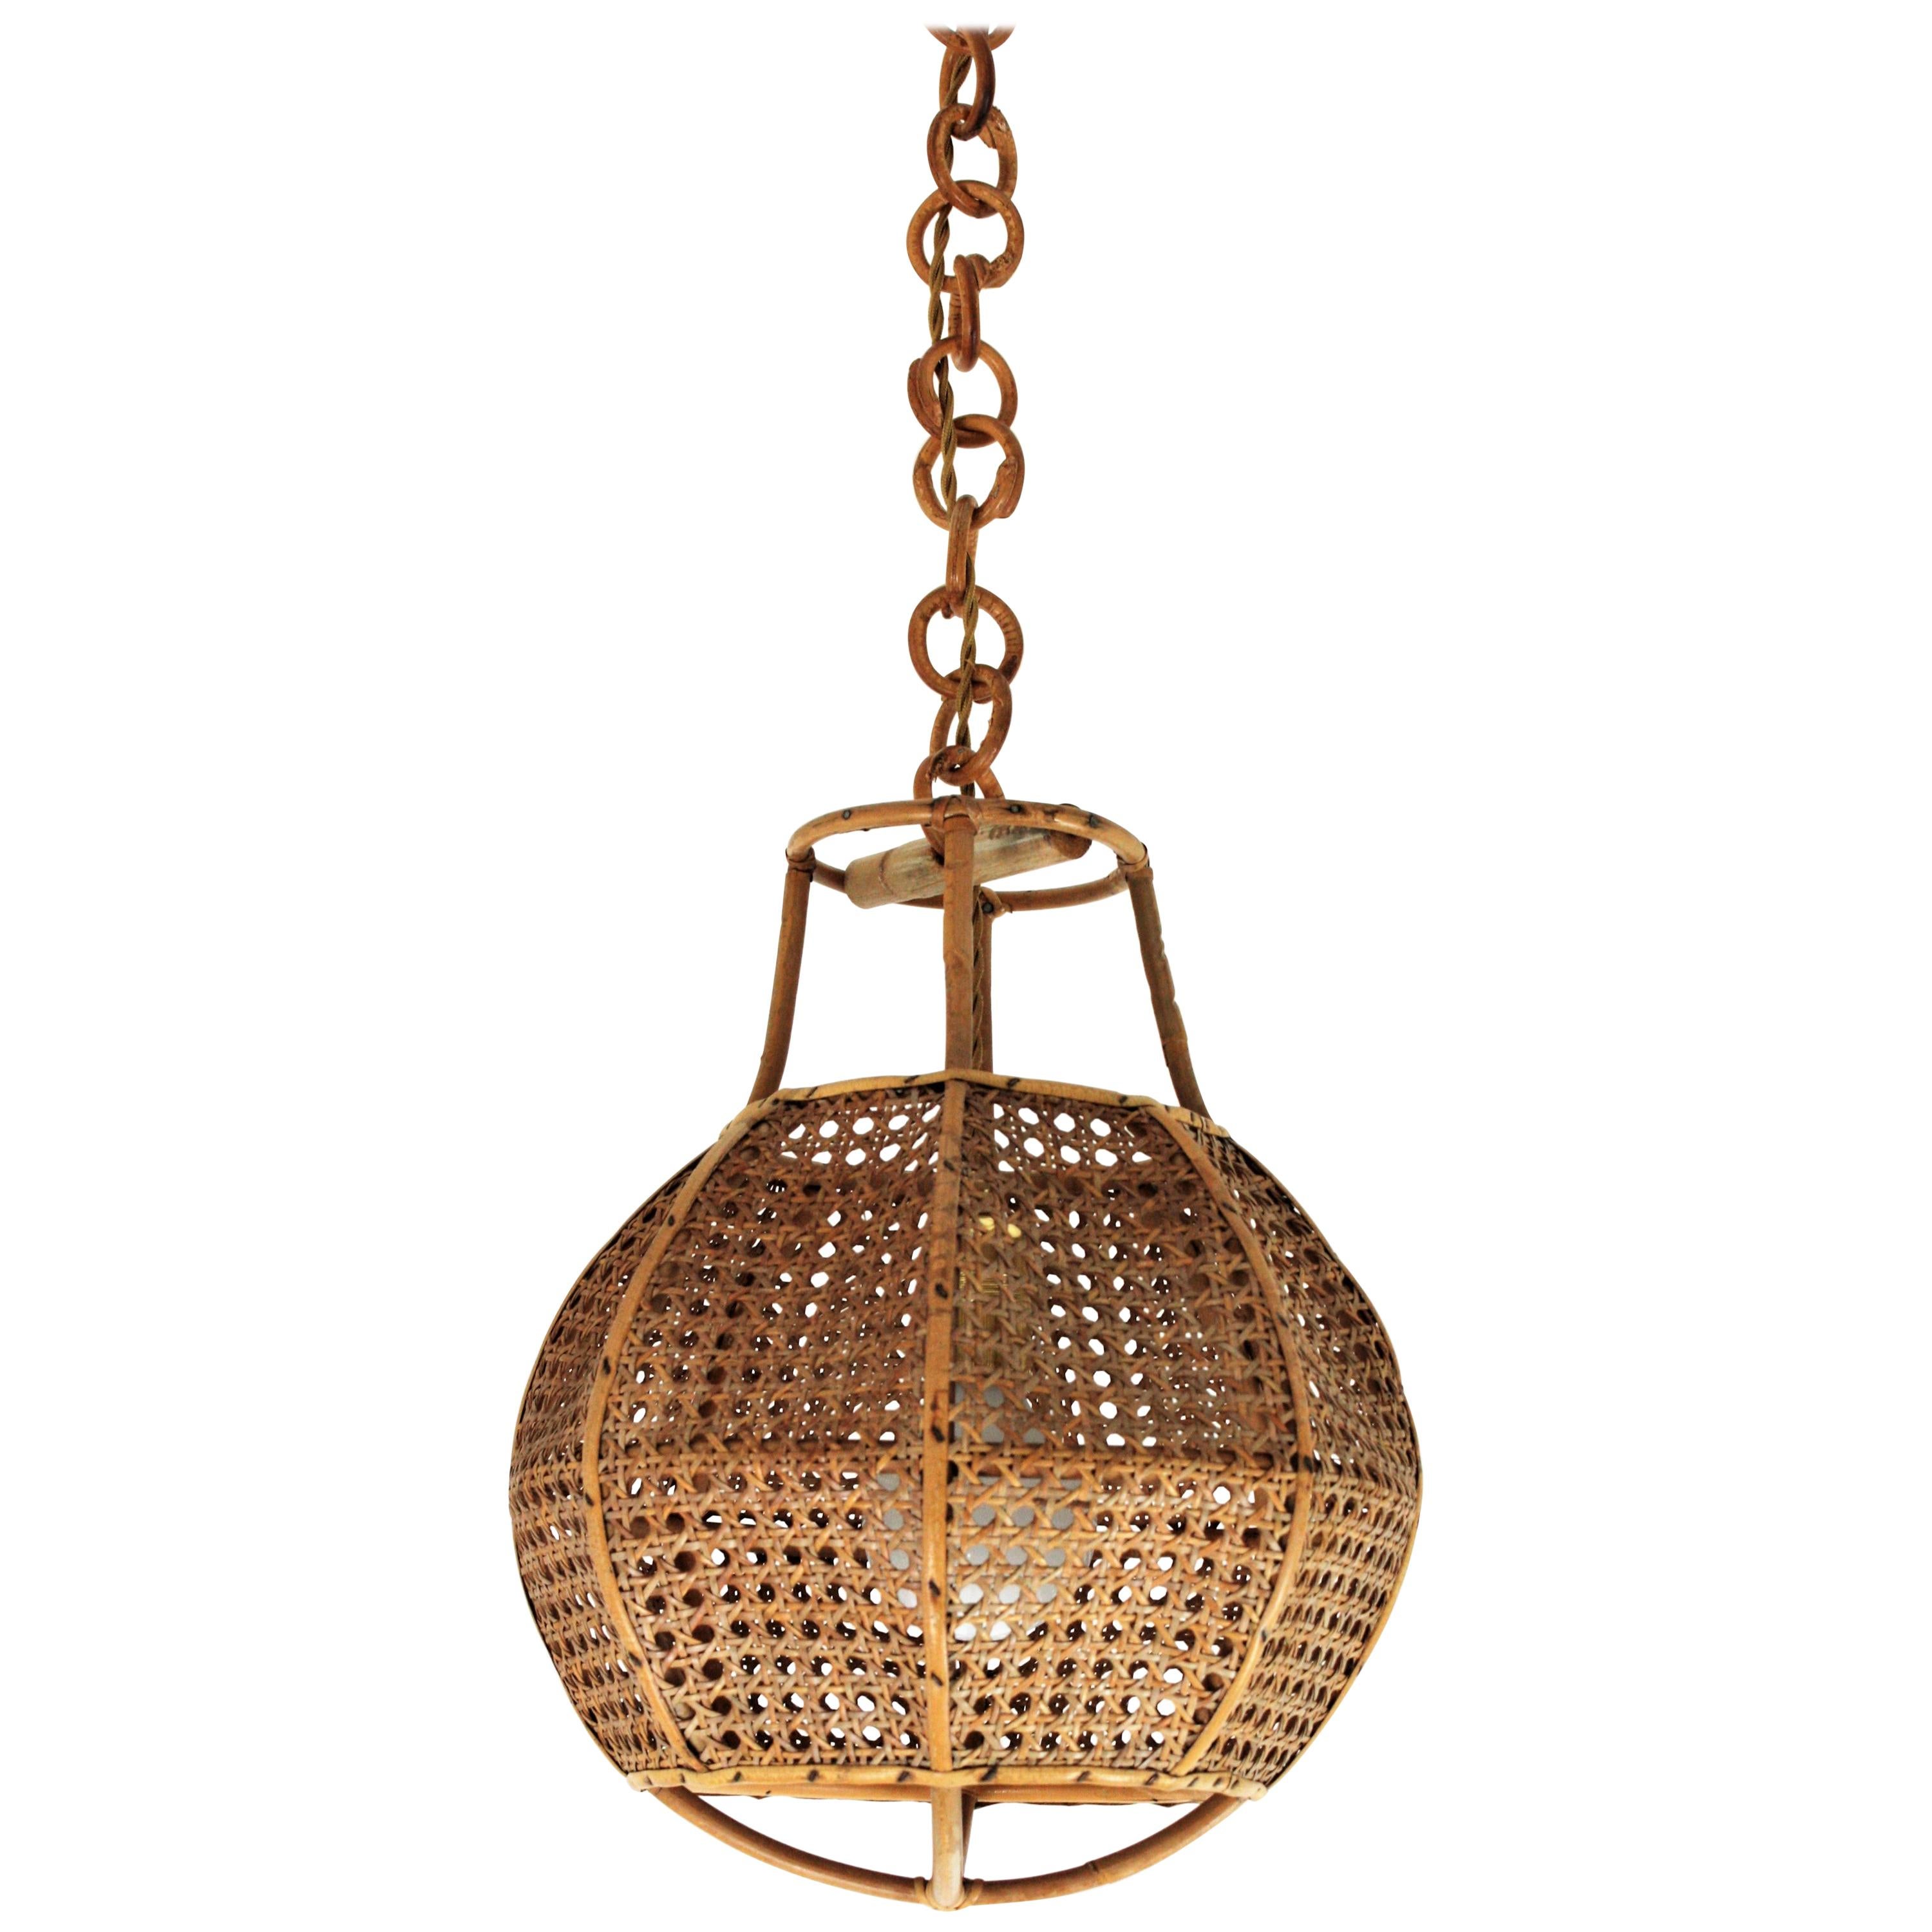 Italian Modernist Wicker Wire and Rattan Globe Pendant / Hanging Light, 1950s